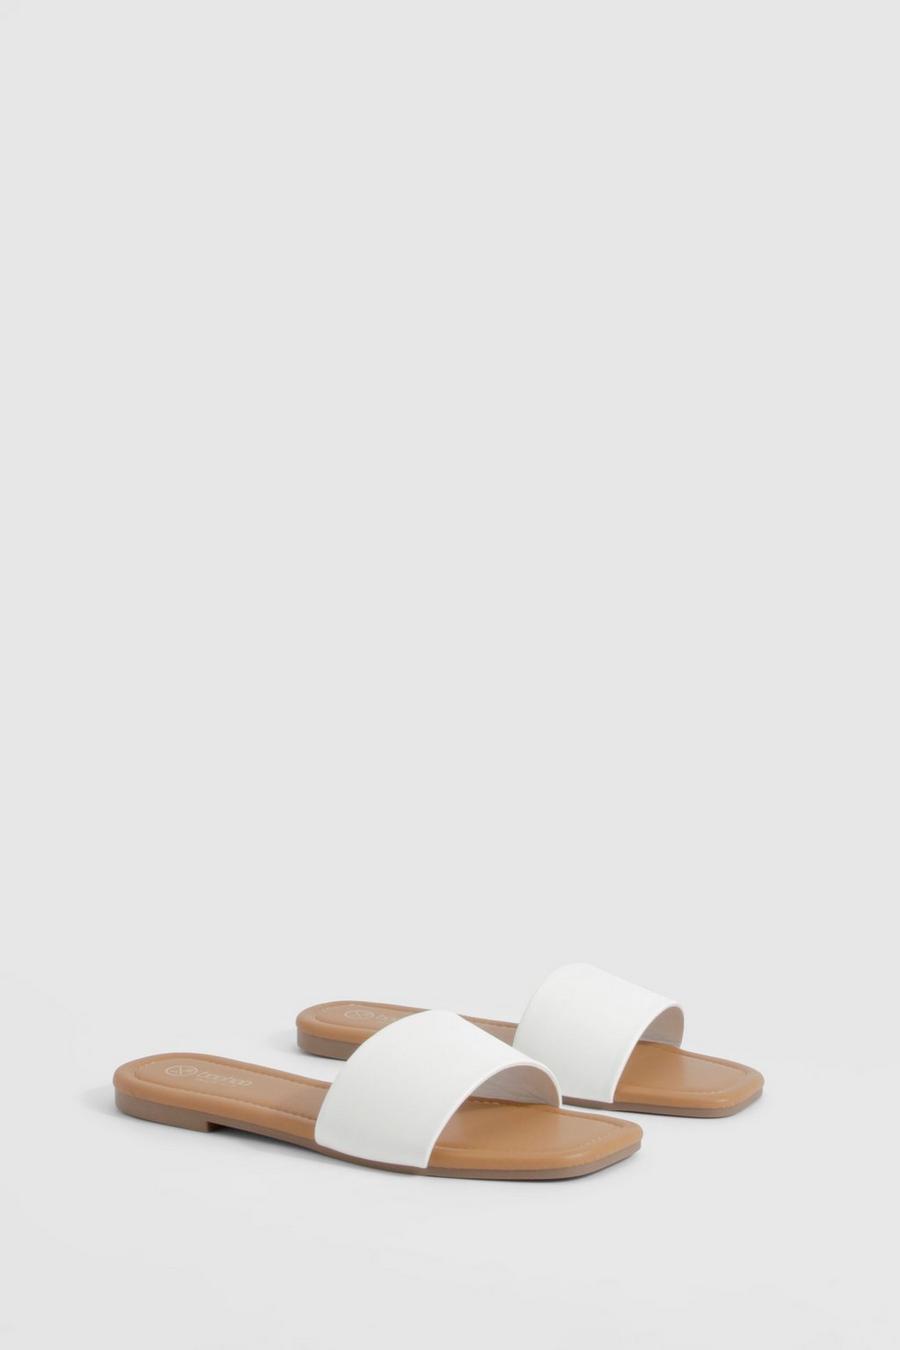 Sandali Mules minimali a calzata ampia, White